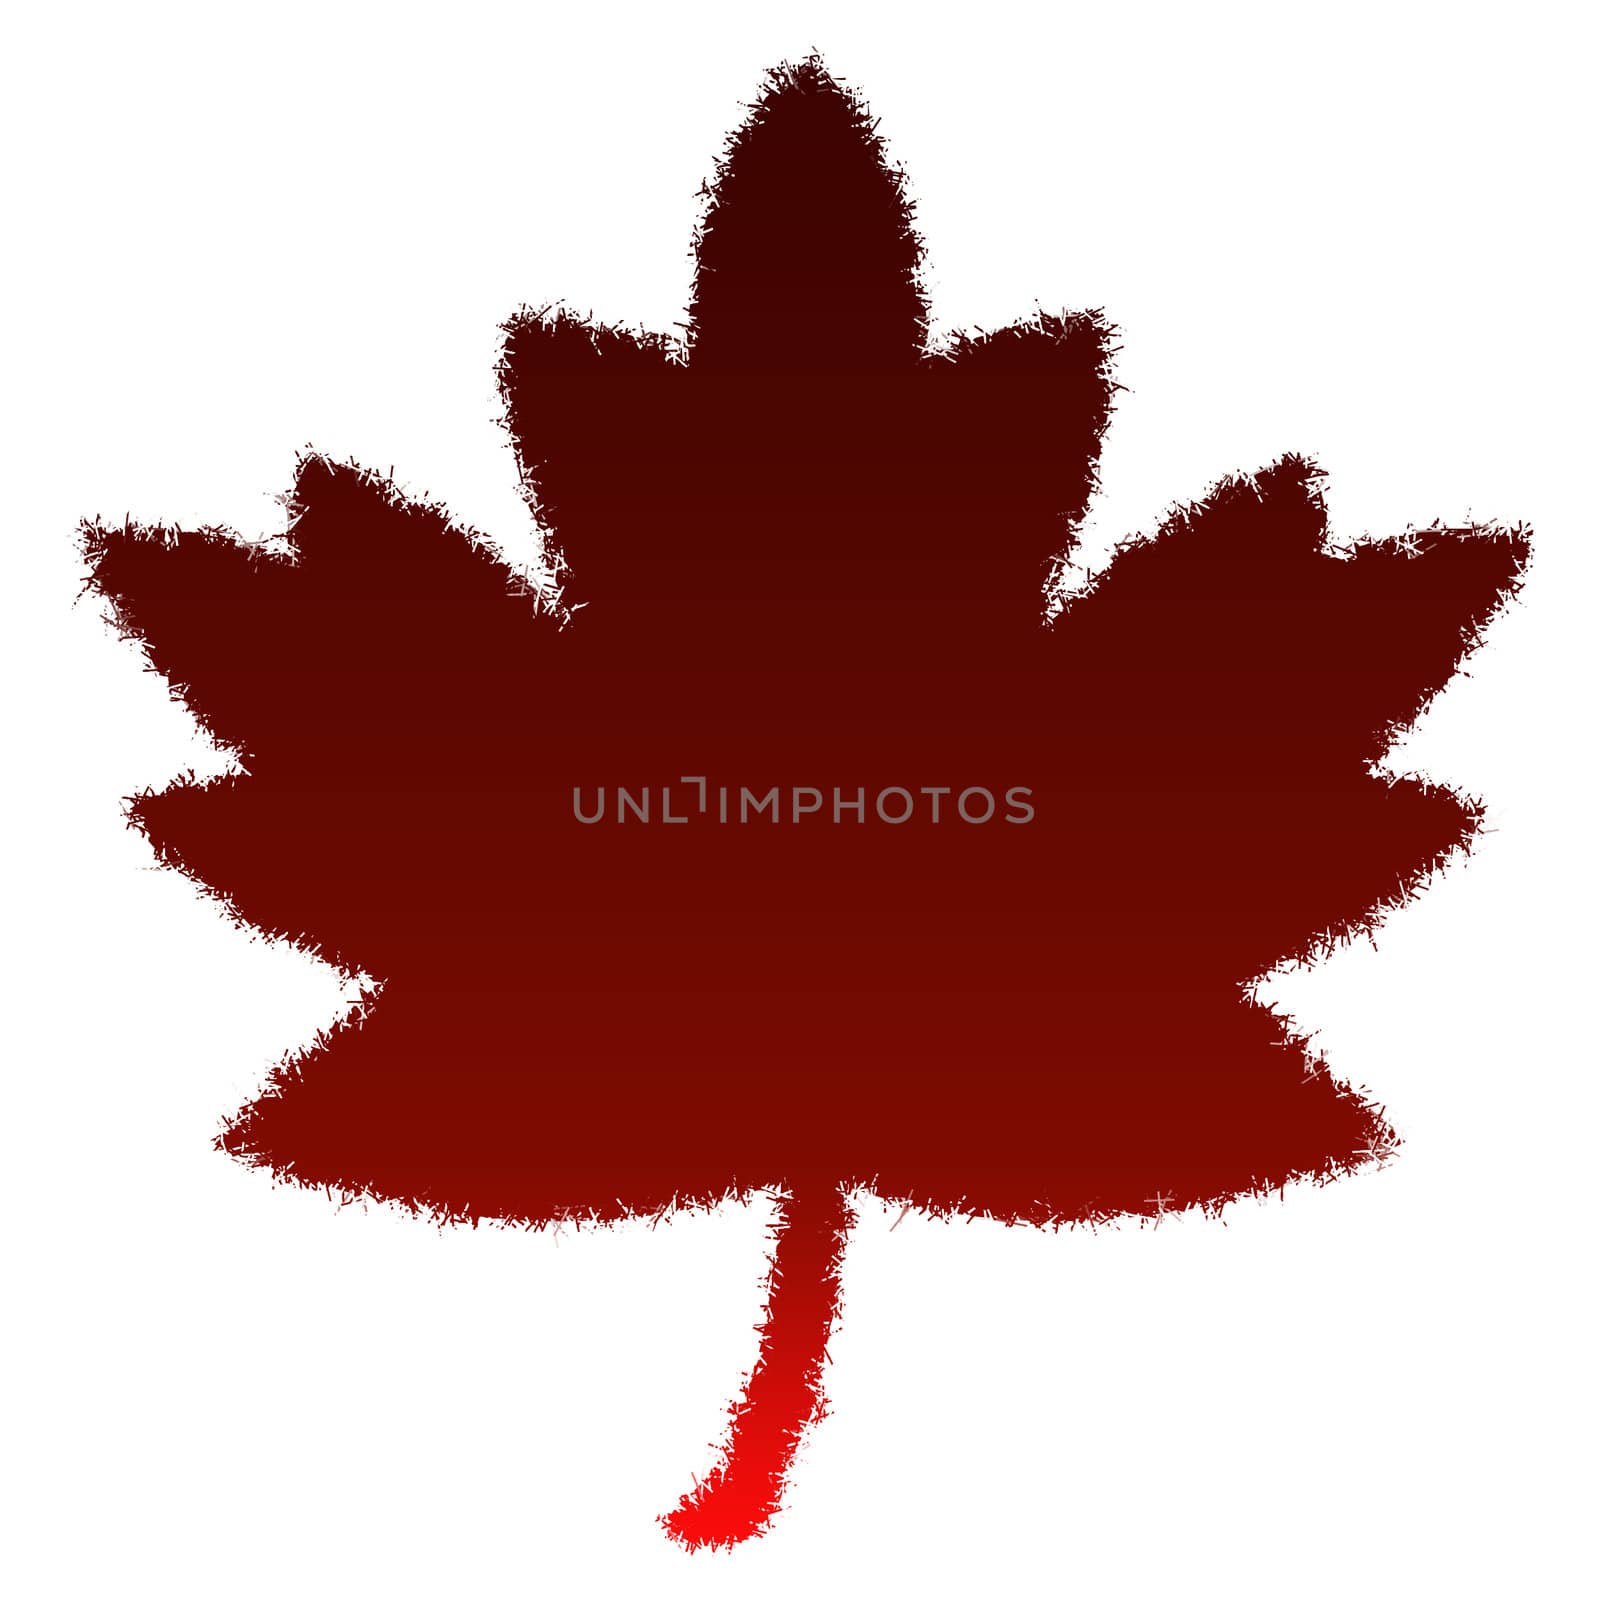 Autumn leaf on a white background. A red autumn leaf